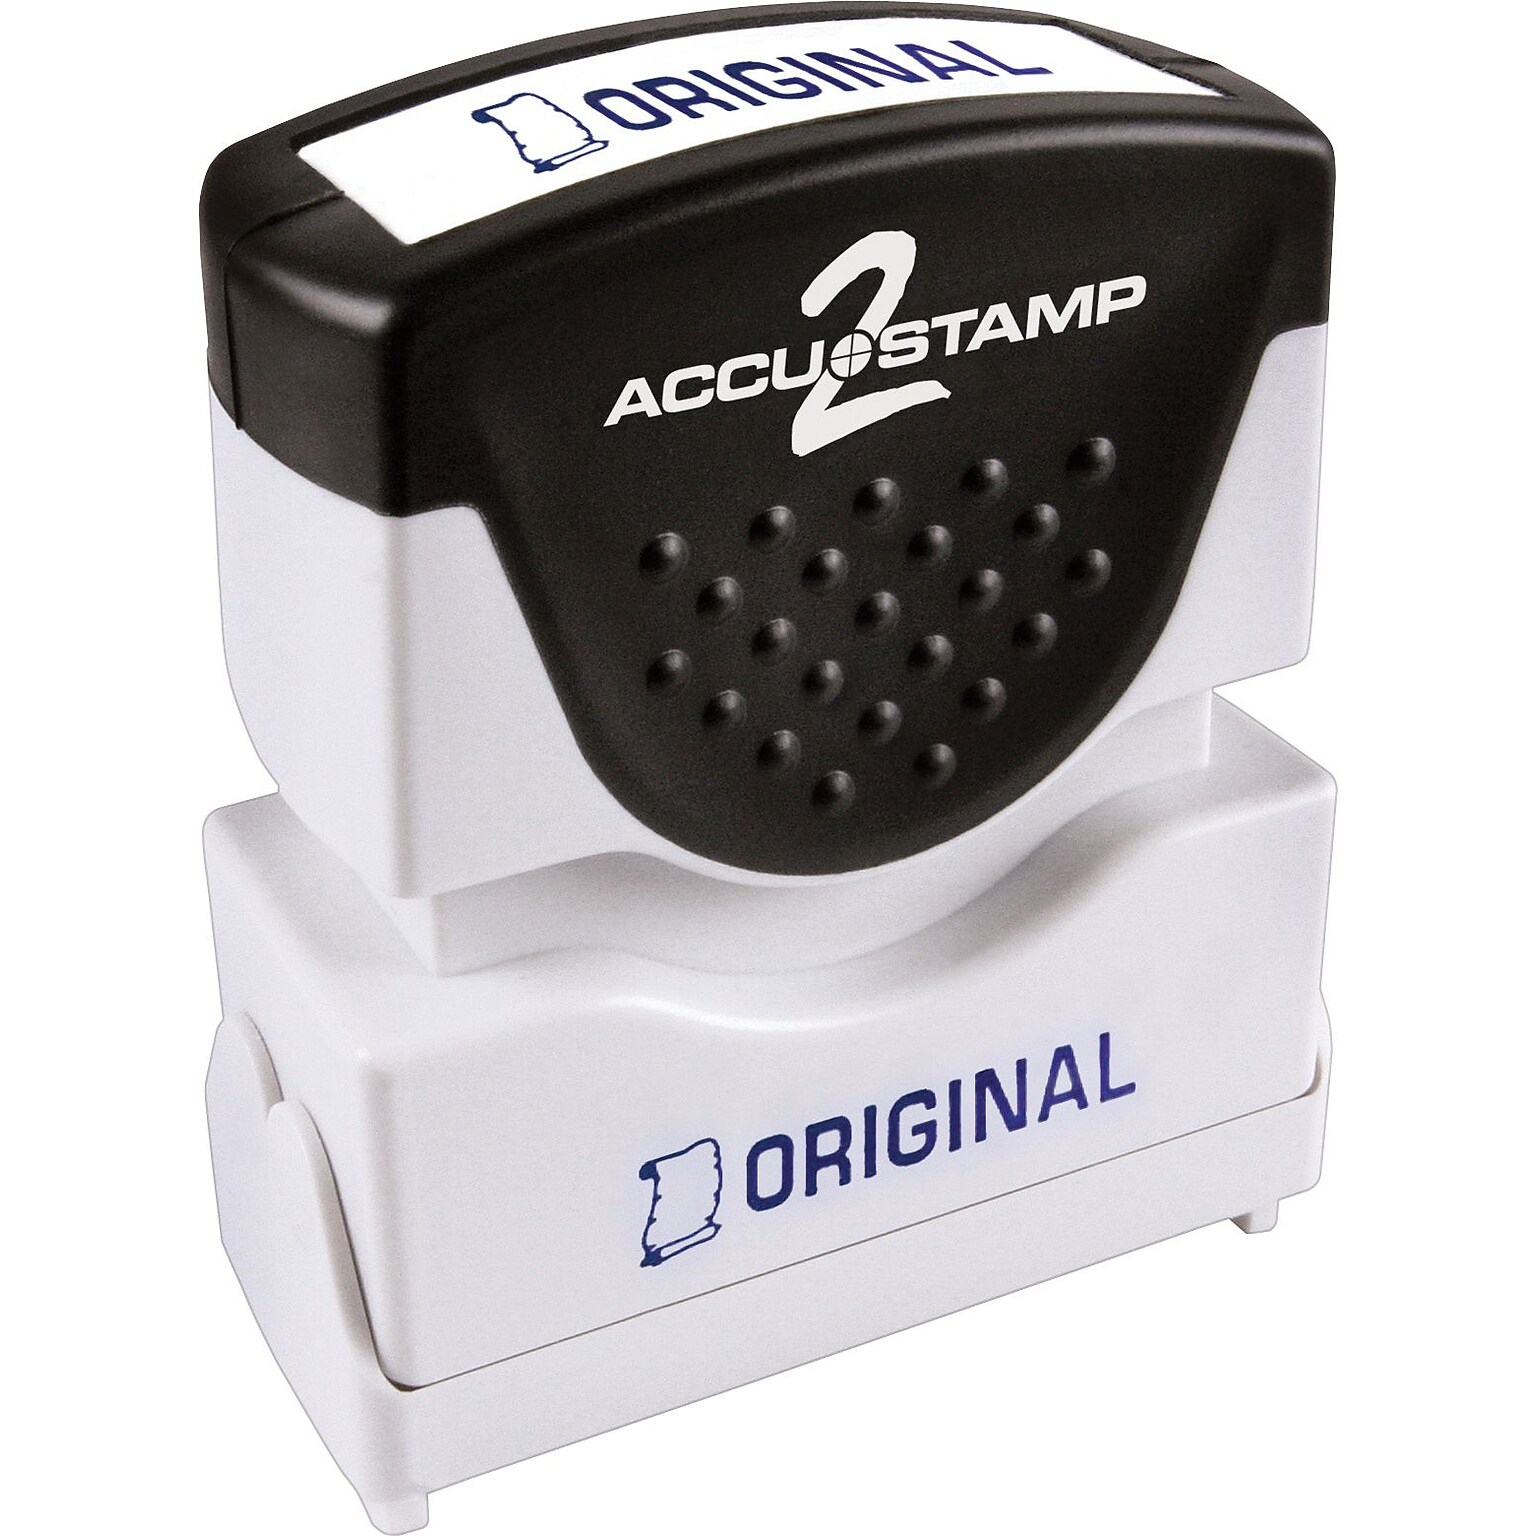 Accu-Stamp2® One-Color Pre-Inked Shutter Message Stamp, ORIGINAL, 1/2 x 1-5/8 Impression, Blue Ink (035572)